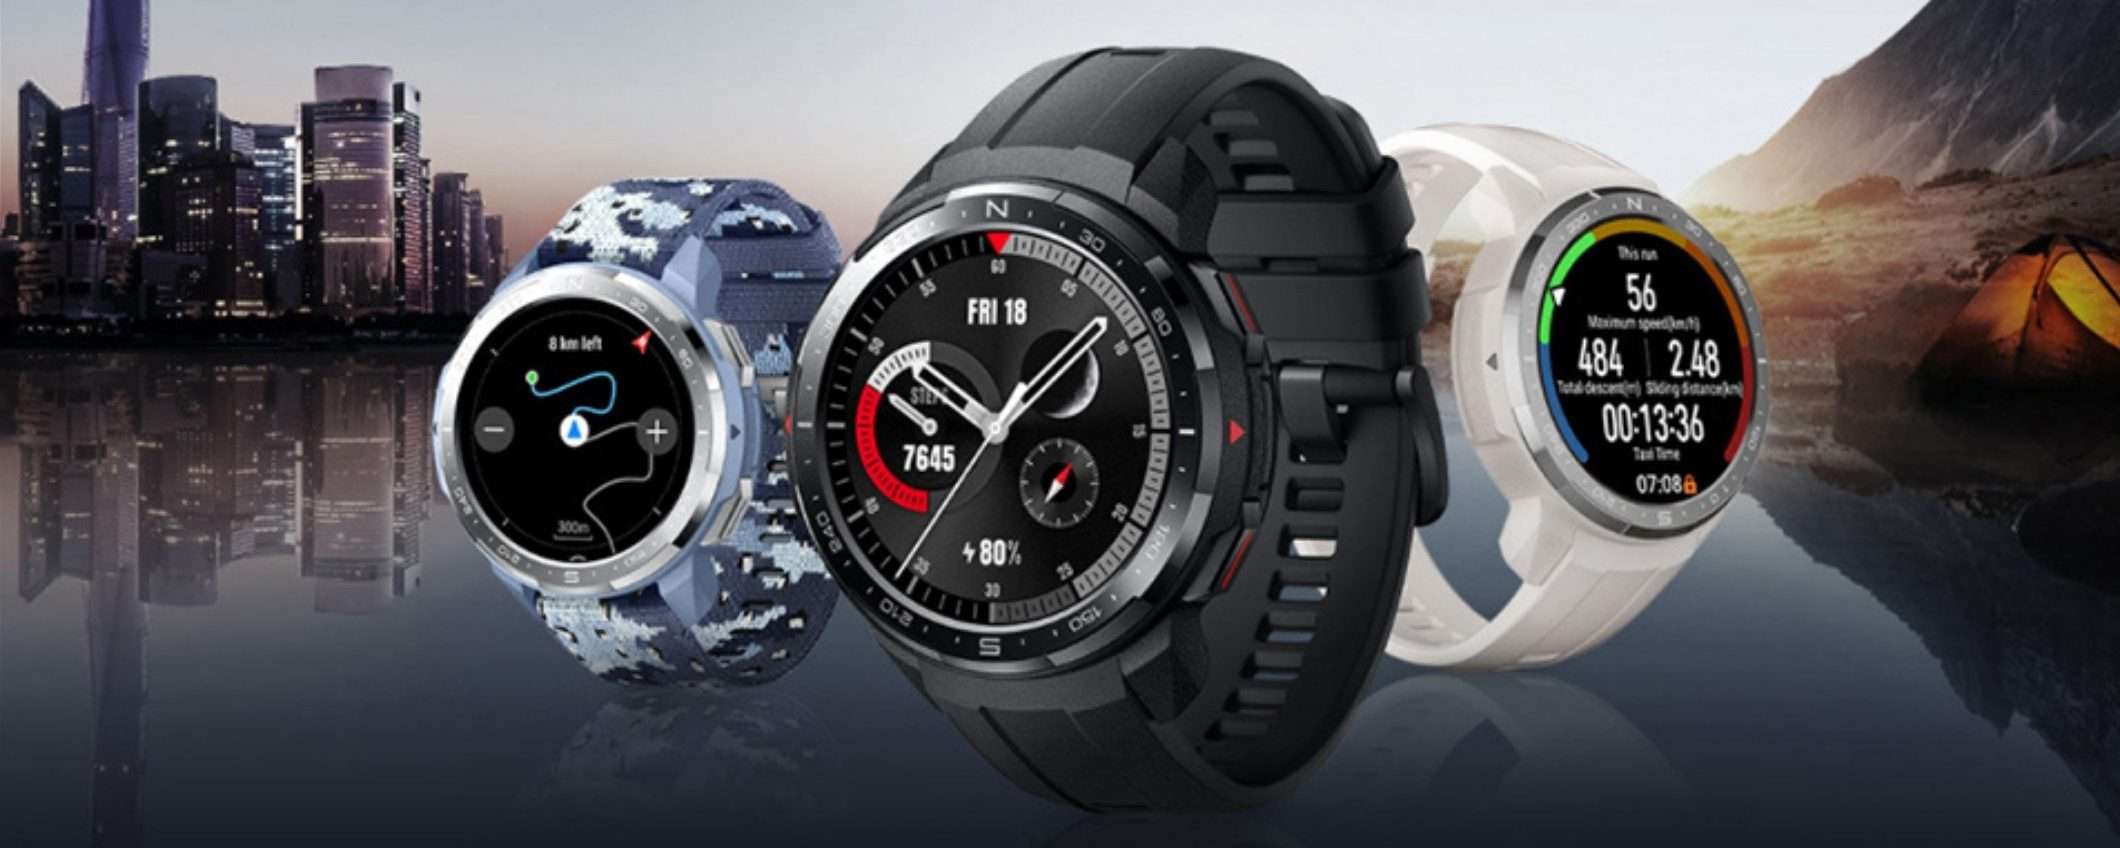 Honor Watch GS Pro, smartwatch in super offerta con questo COUPON